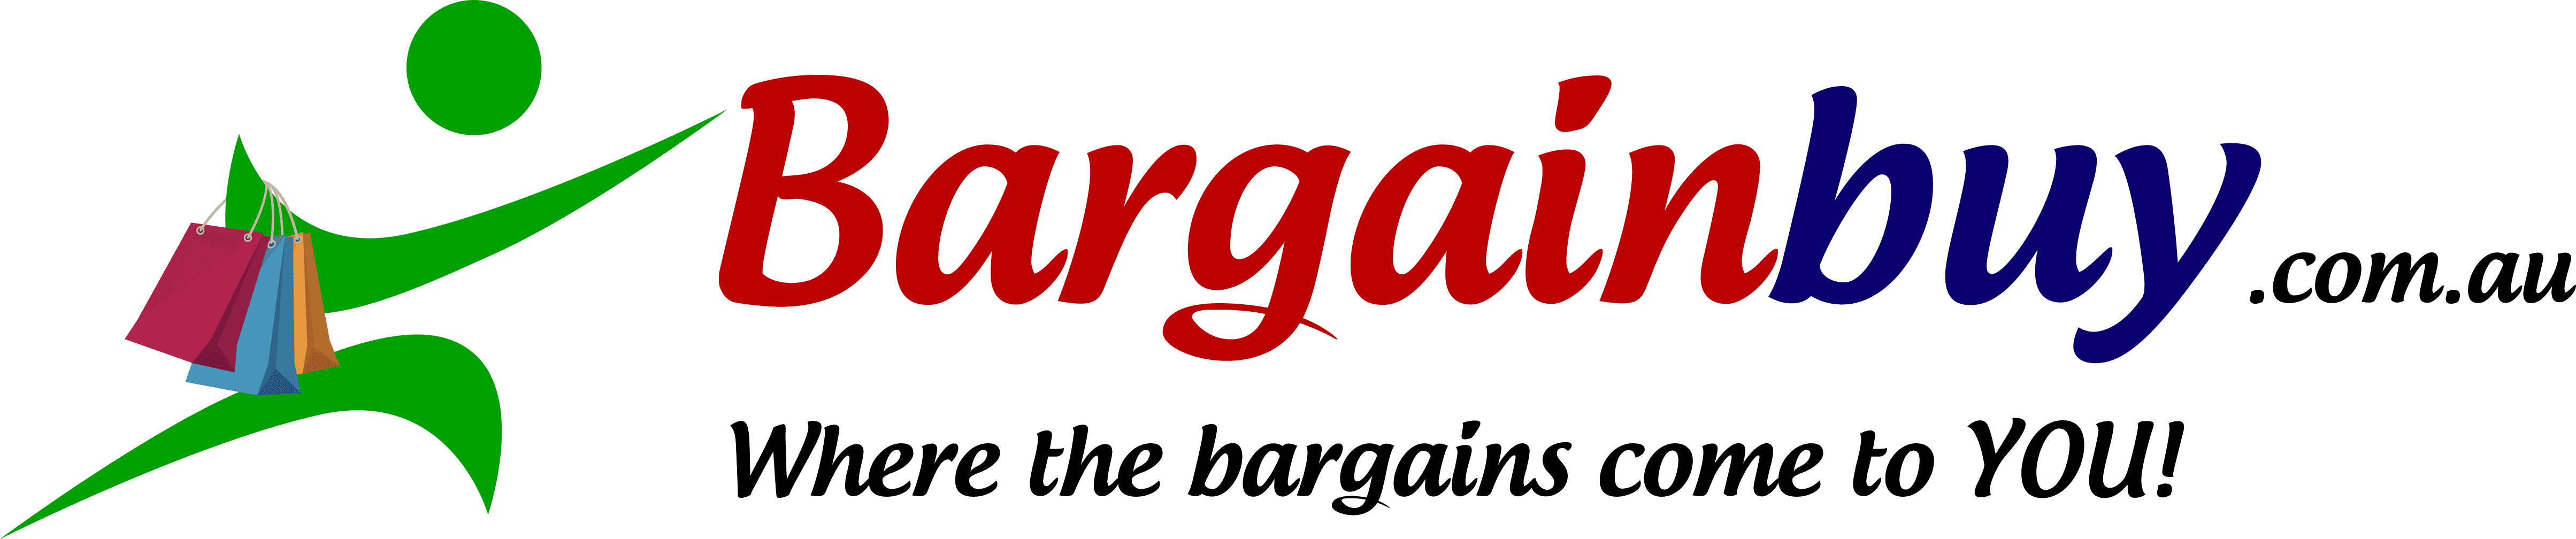 Bargain Buy | Clearance Sales Melbourne